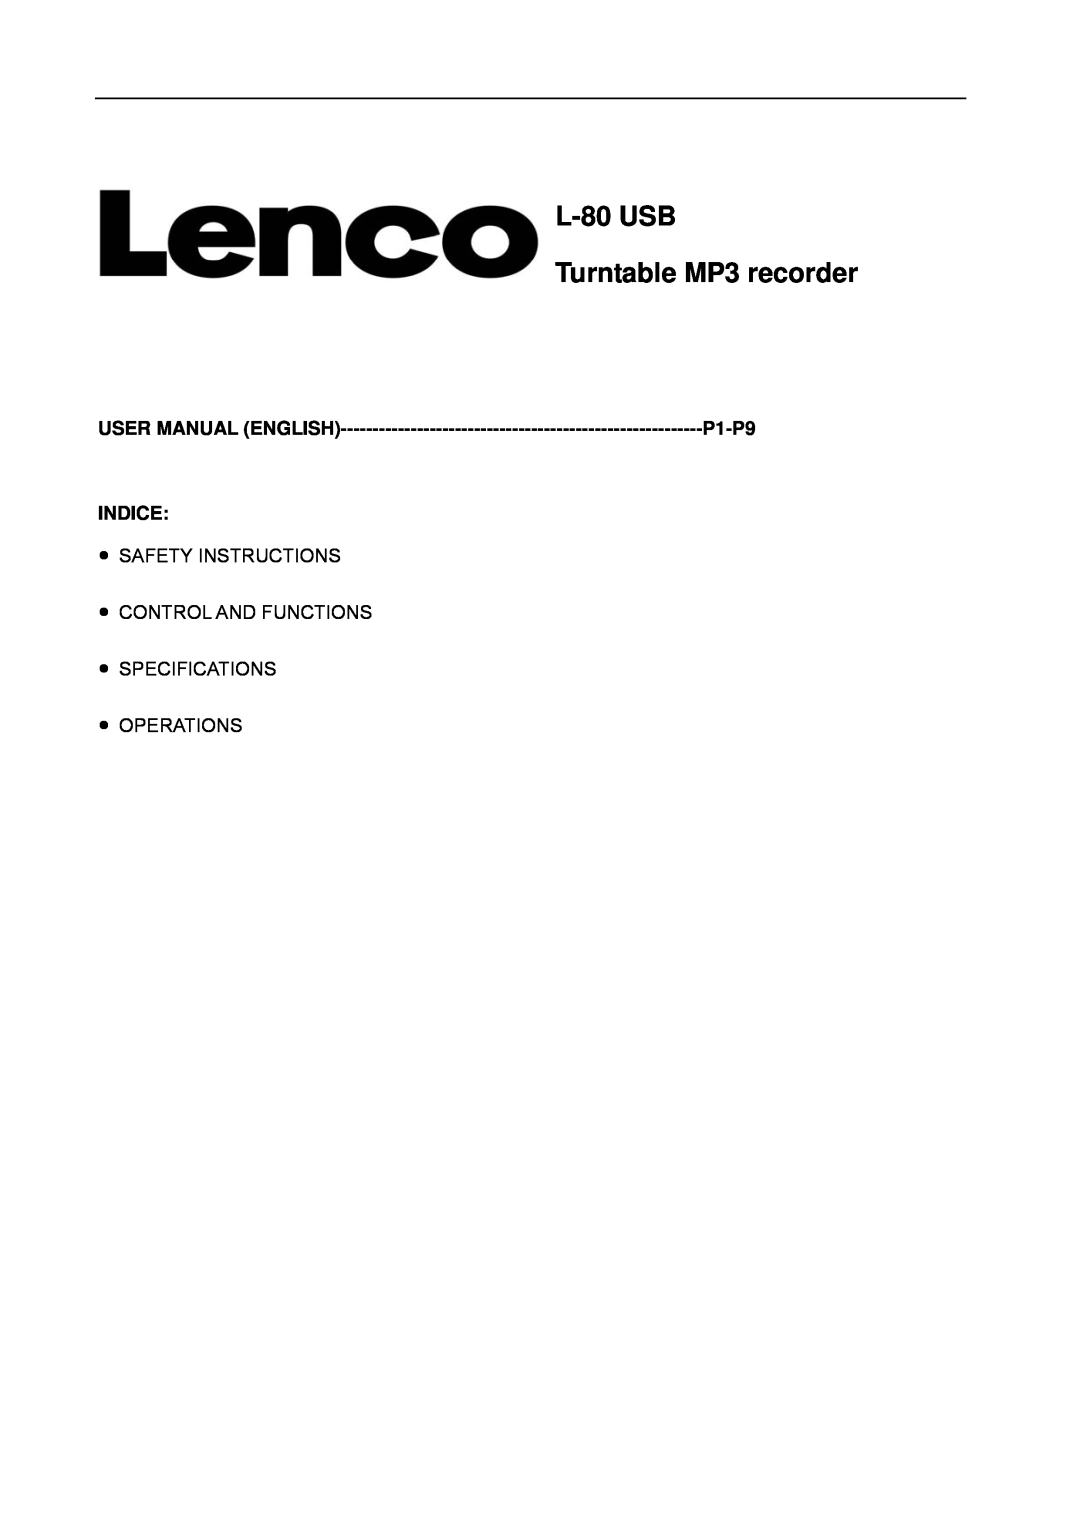 Lenco Marine L-80 USB user manual L-80USB Turntable MP3 recorder, P1-P9, Indice 